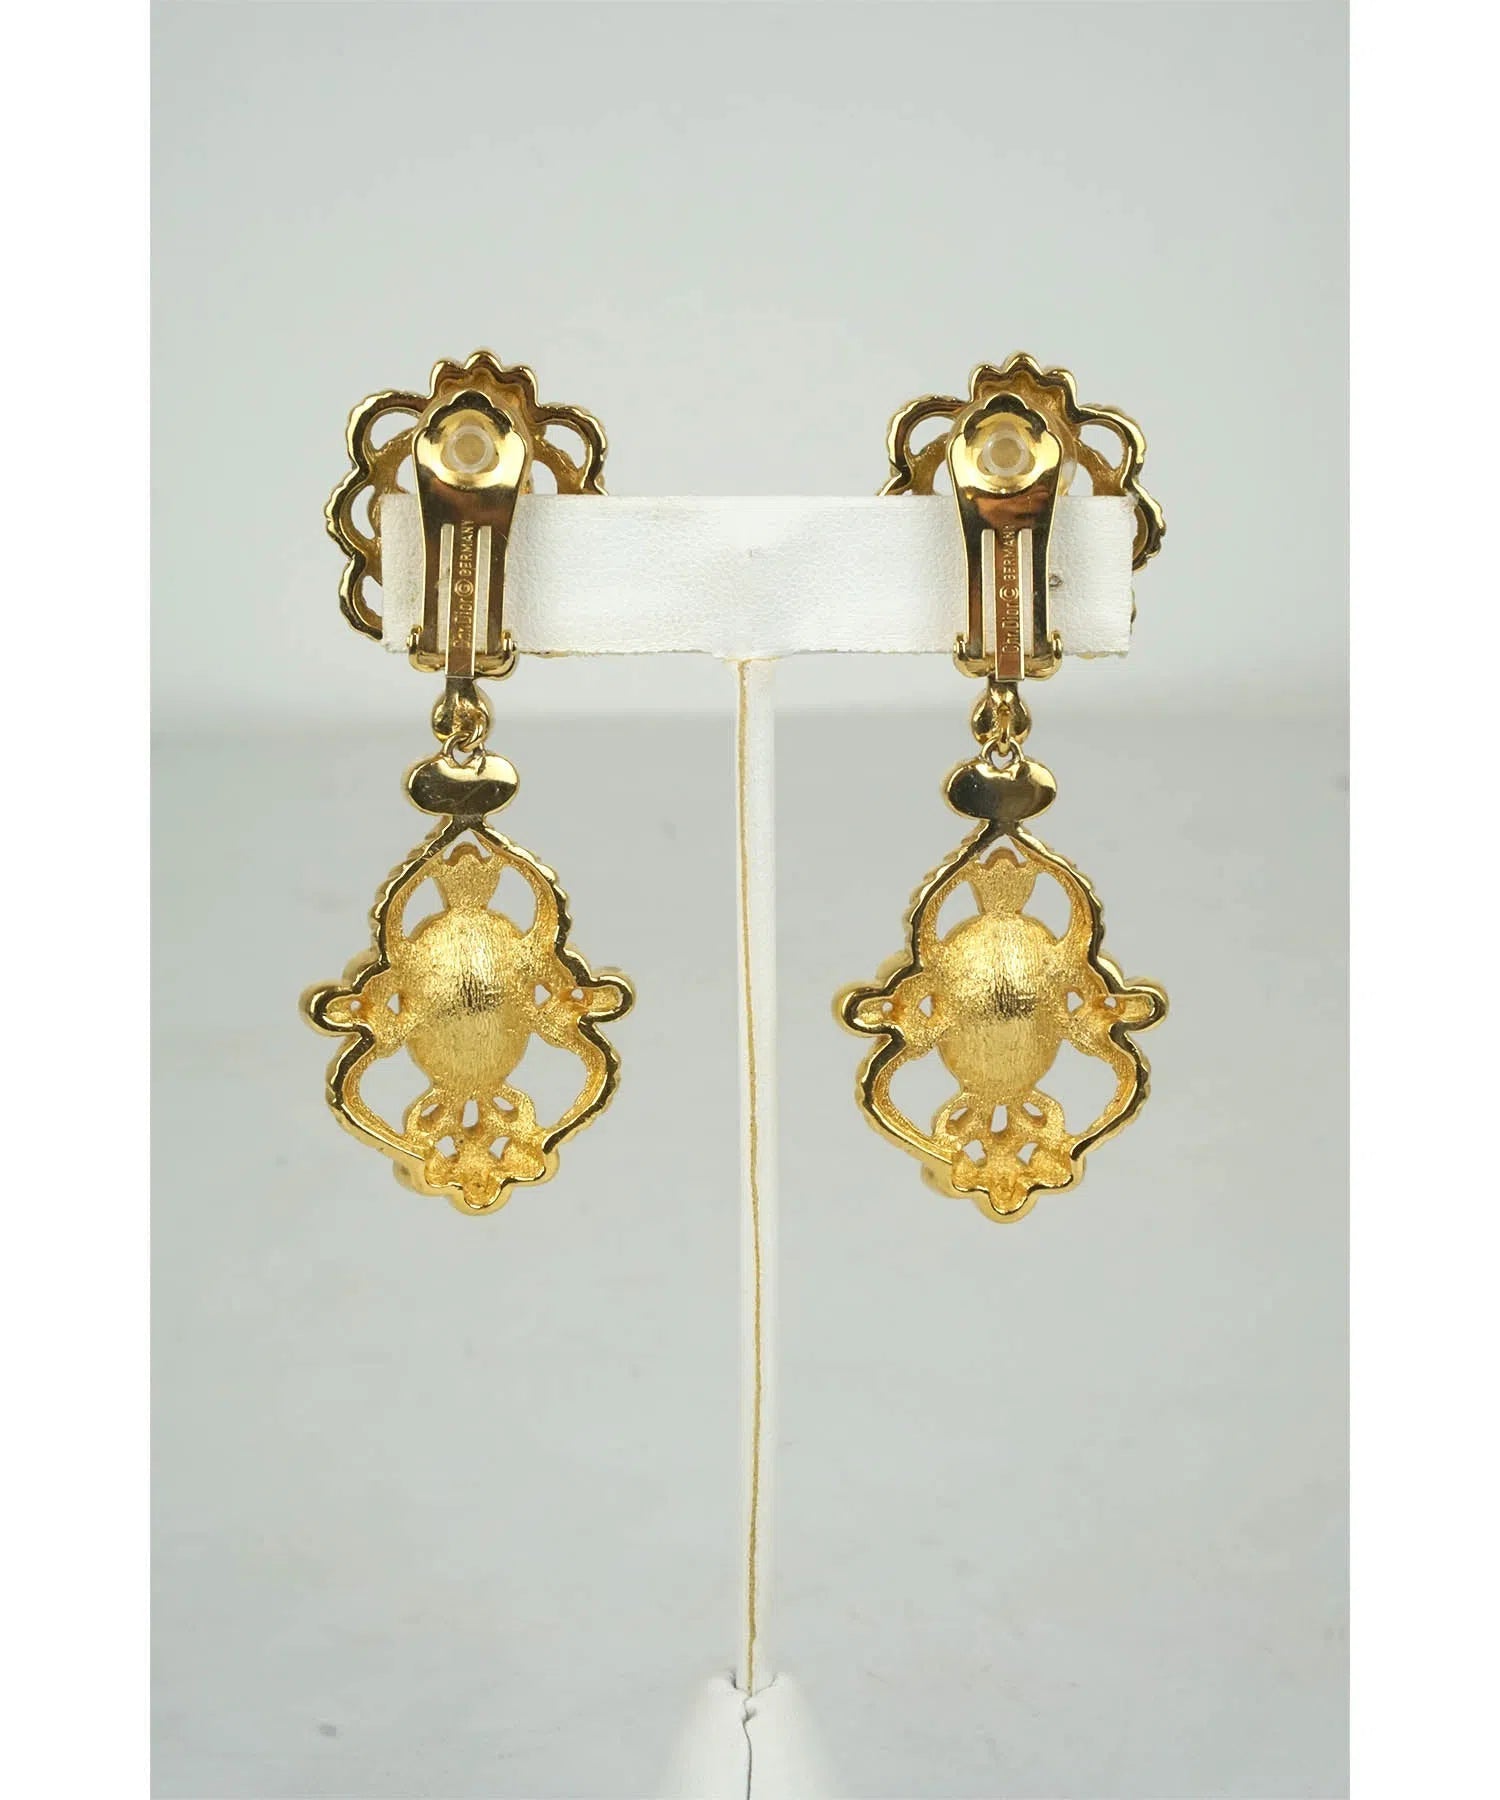 Christian Dior Rare Vintage Crystal Embellished Earrings 1960's-1970's